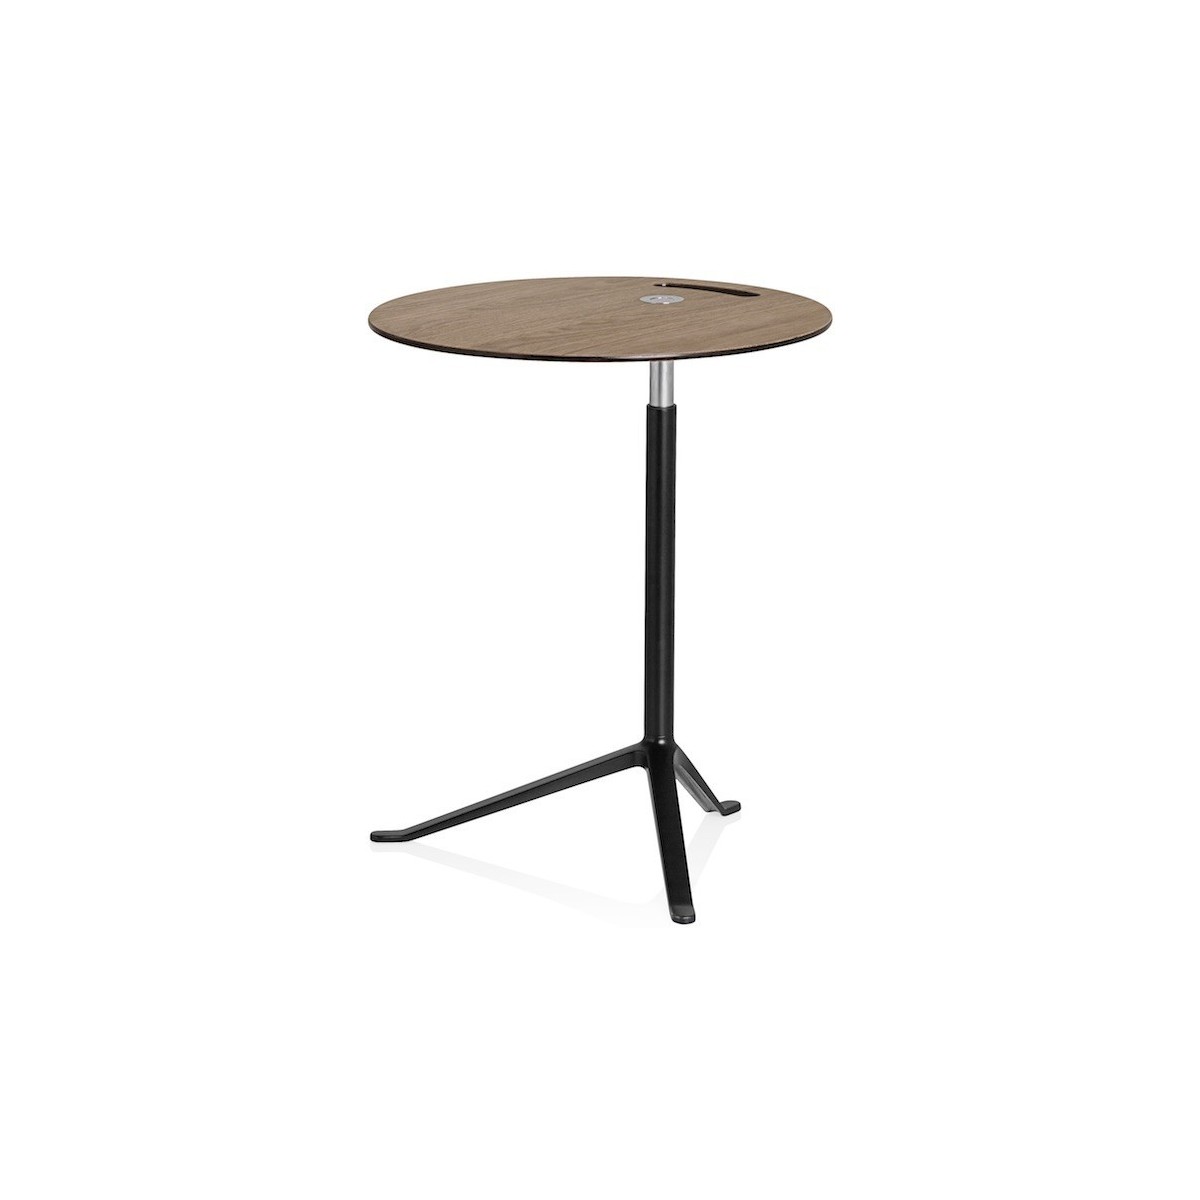 KS12 Little Friend table (Fixed height) – Walnut / Black